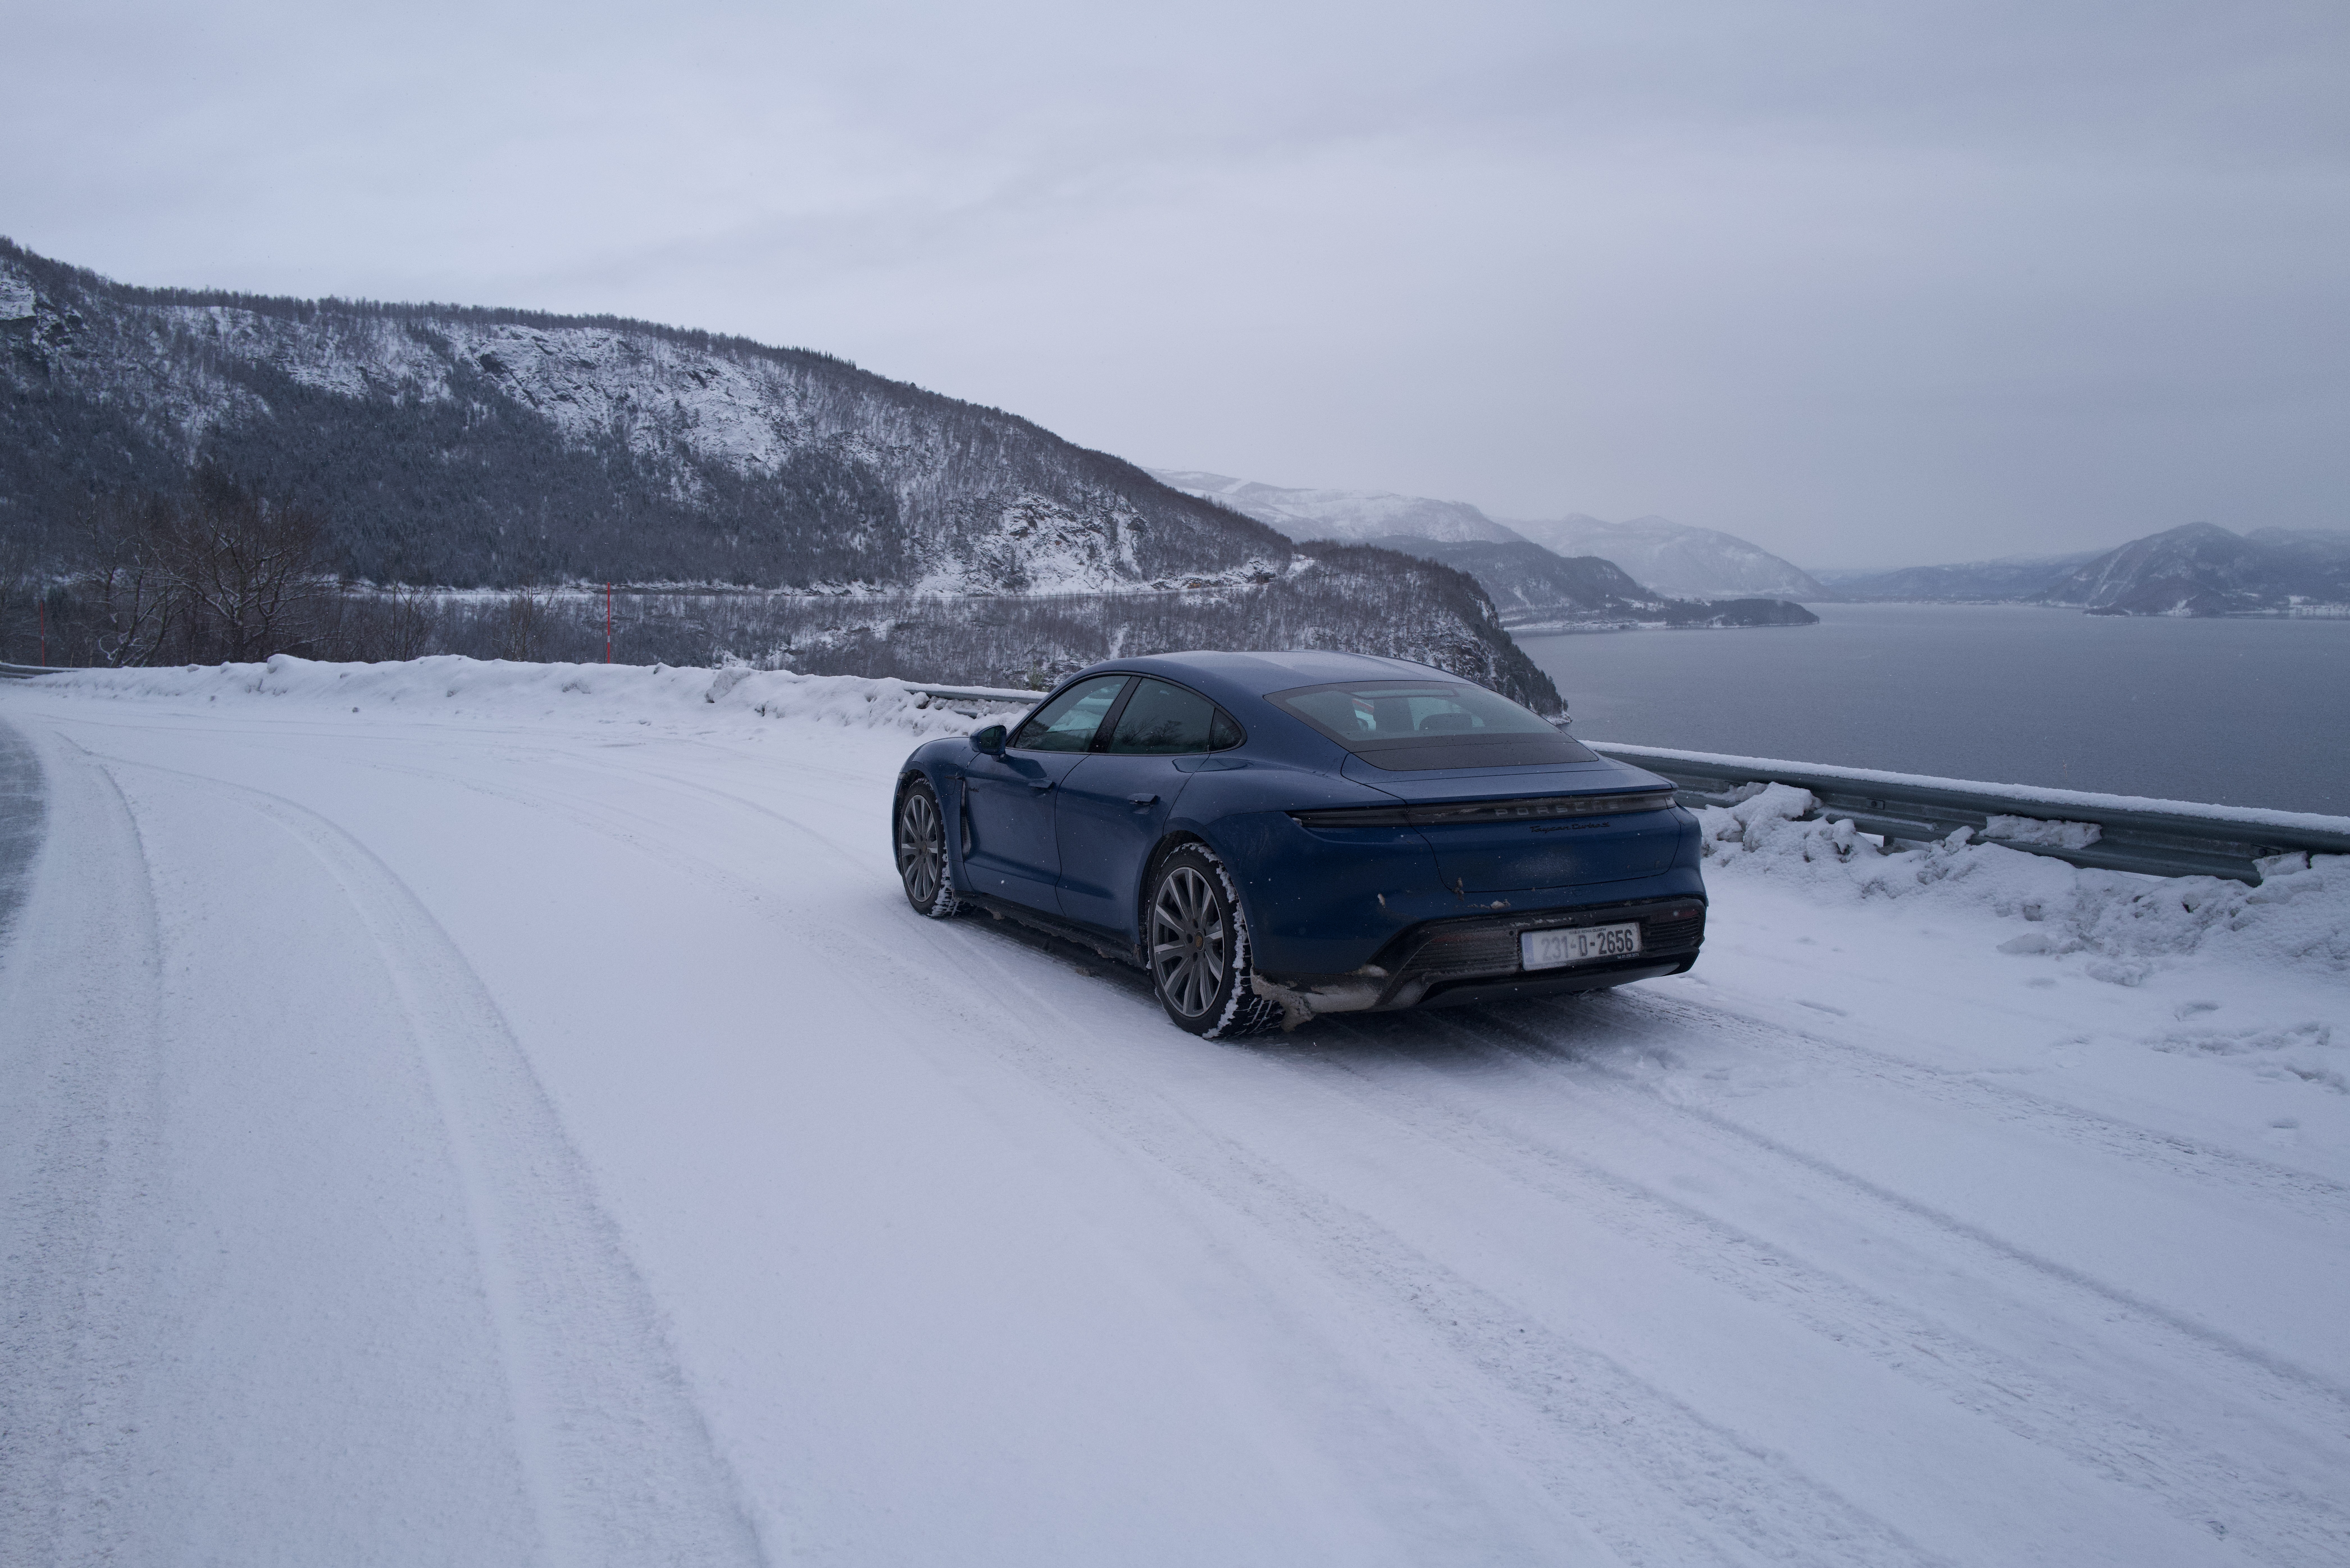 Porsche Taycan Taycan to Lofoten Islands, Norway (Follow Our Trip Report) 53546661241_cd58ce74bc_o